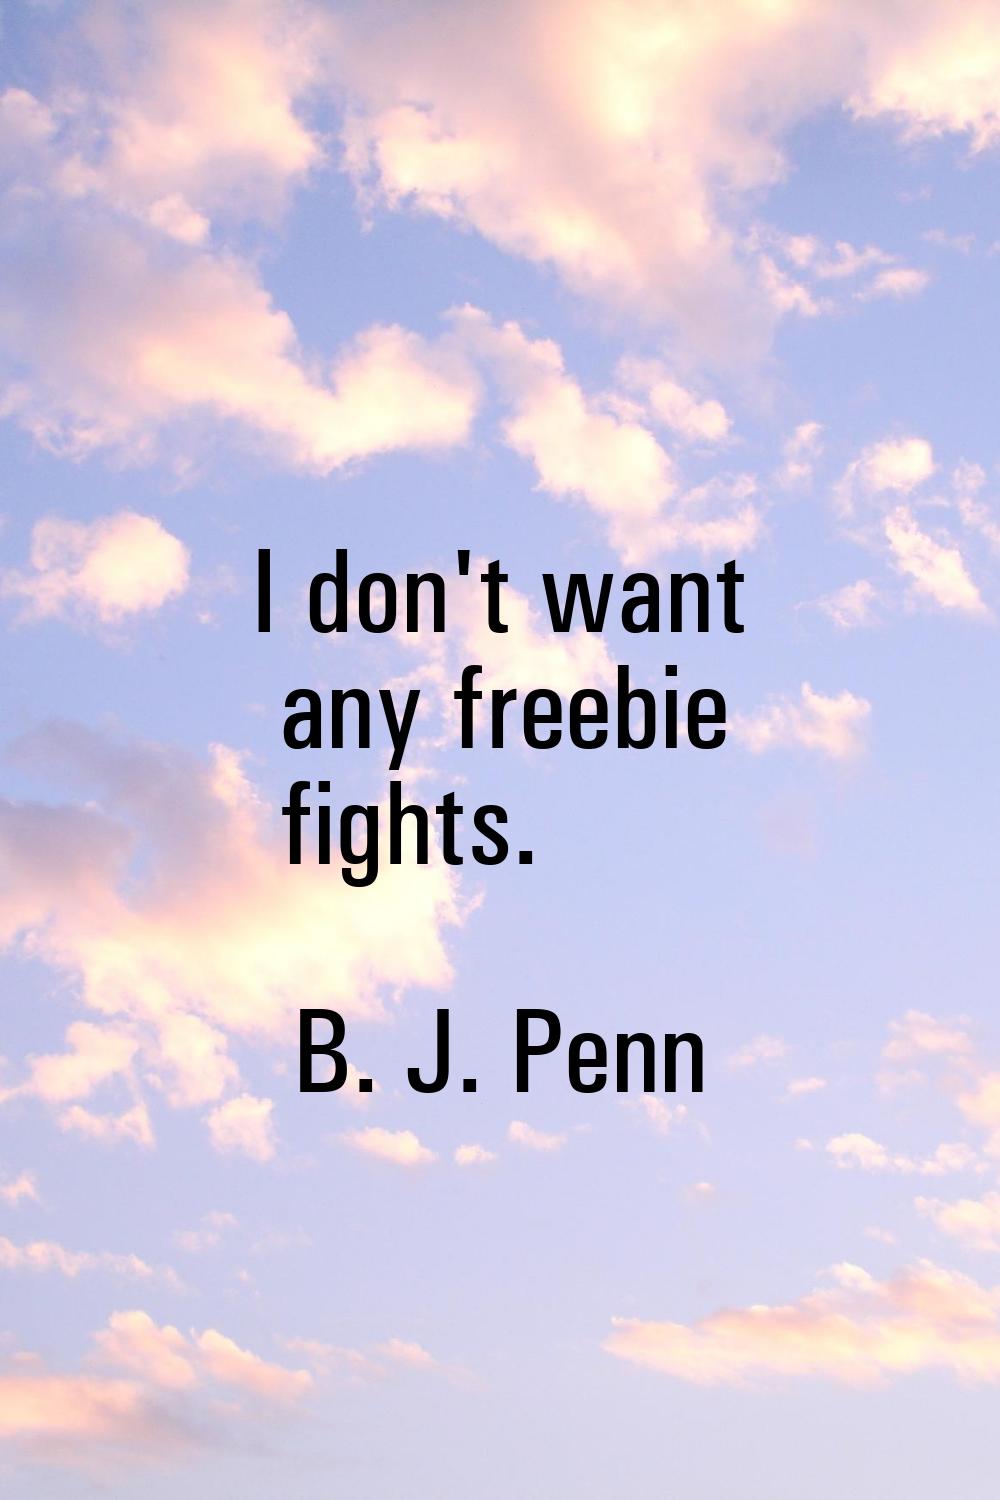 I don't want any freebie fights.